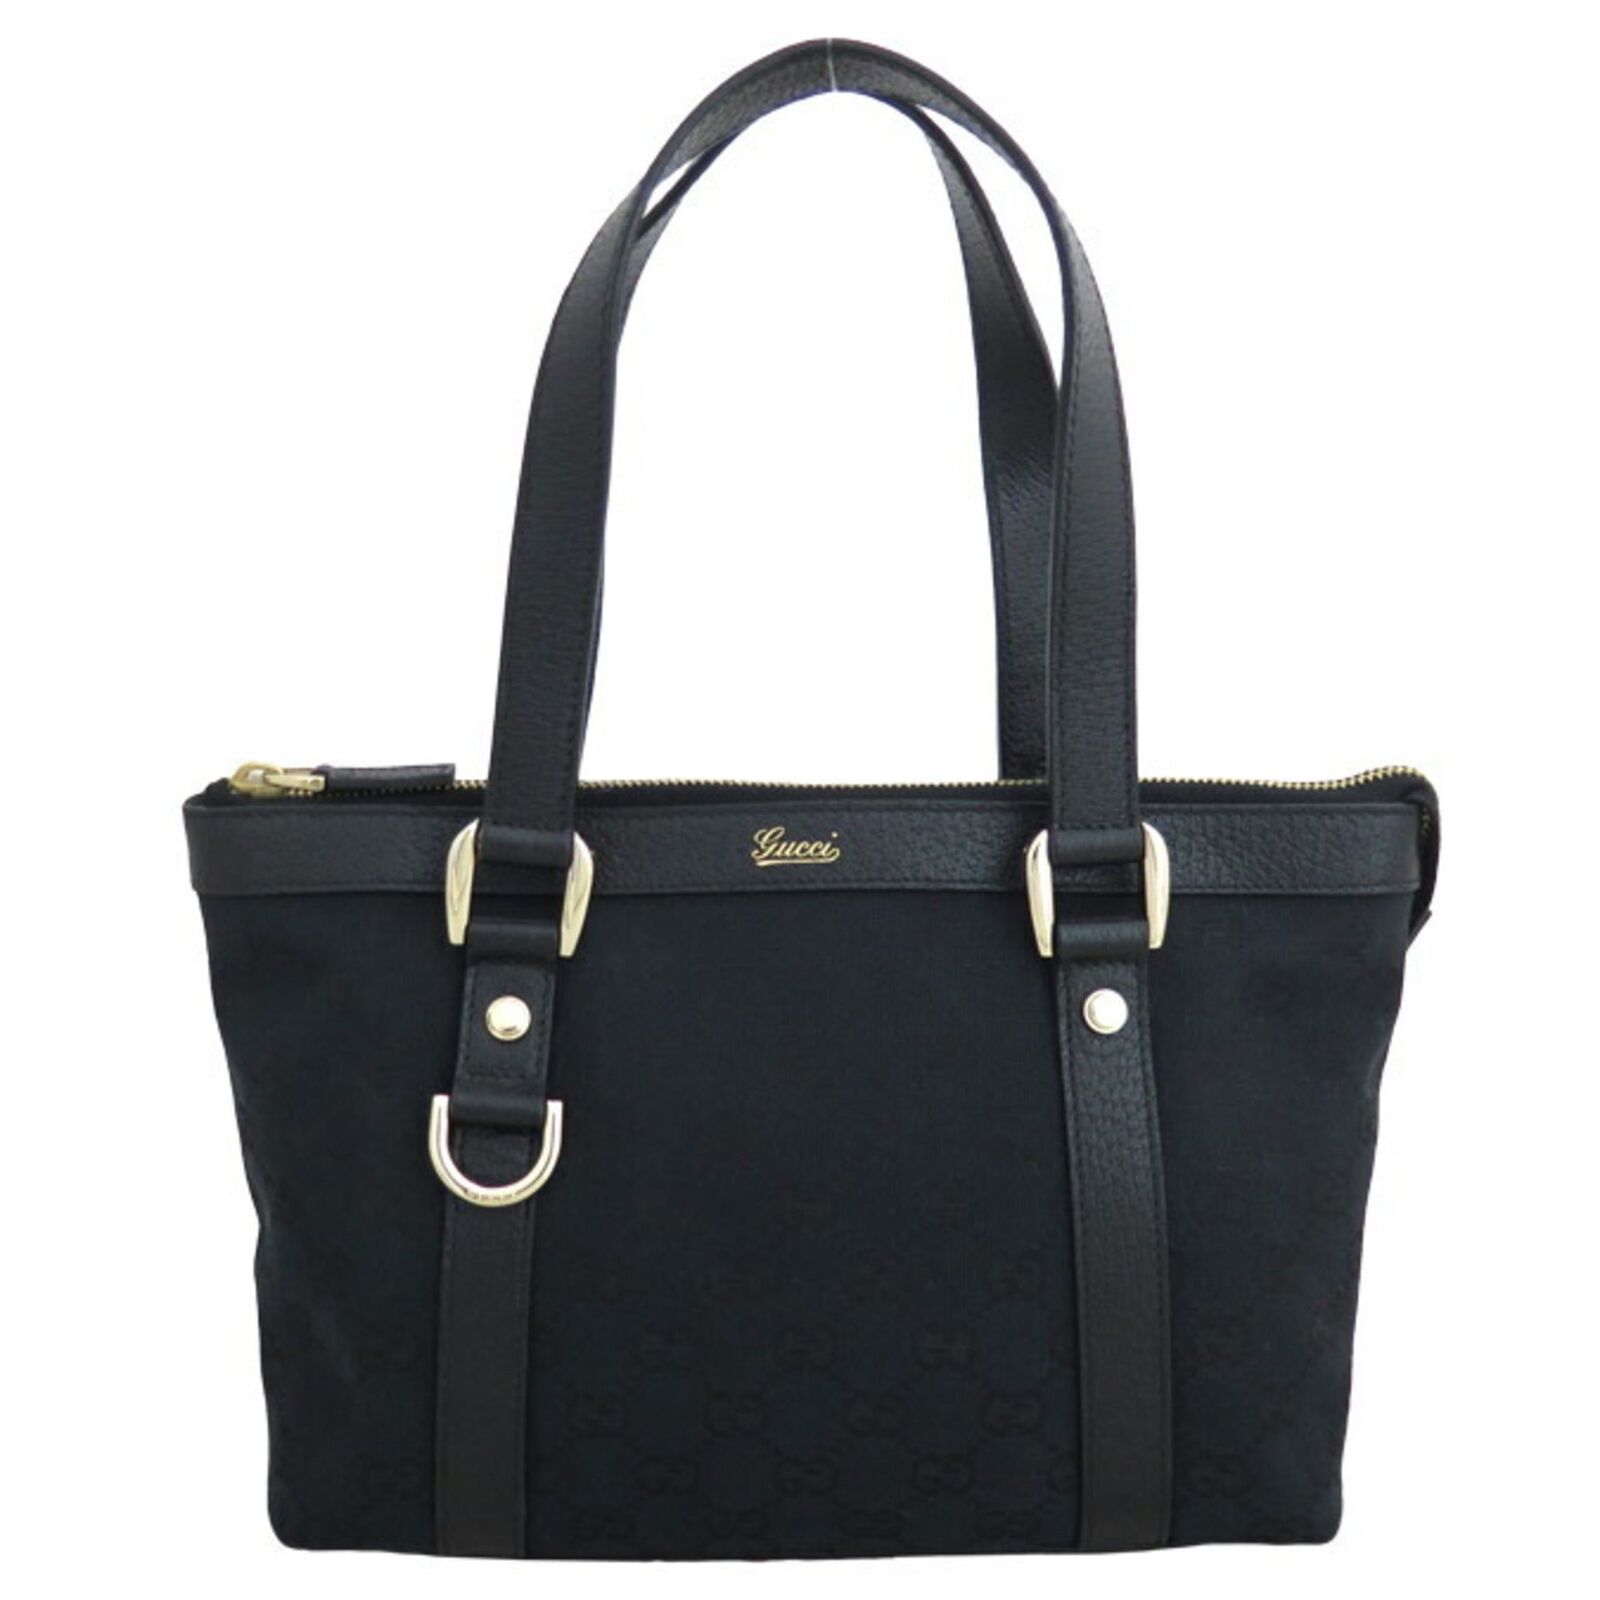 Image of Gucci GUCCI handbag tote bag GG canvas canvas/leather black gold ladies 141471